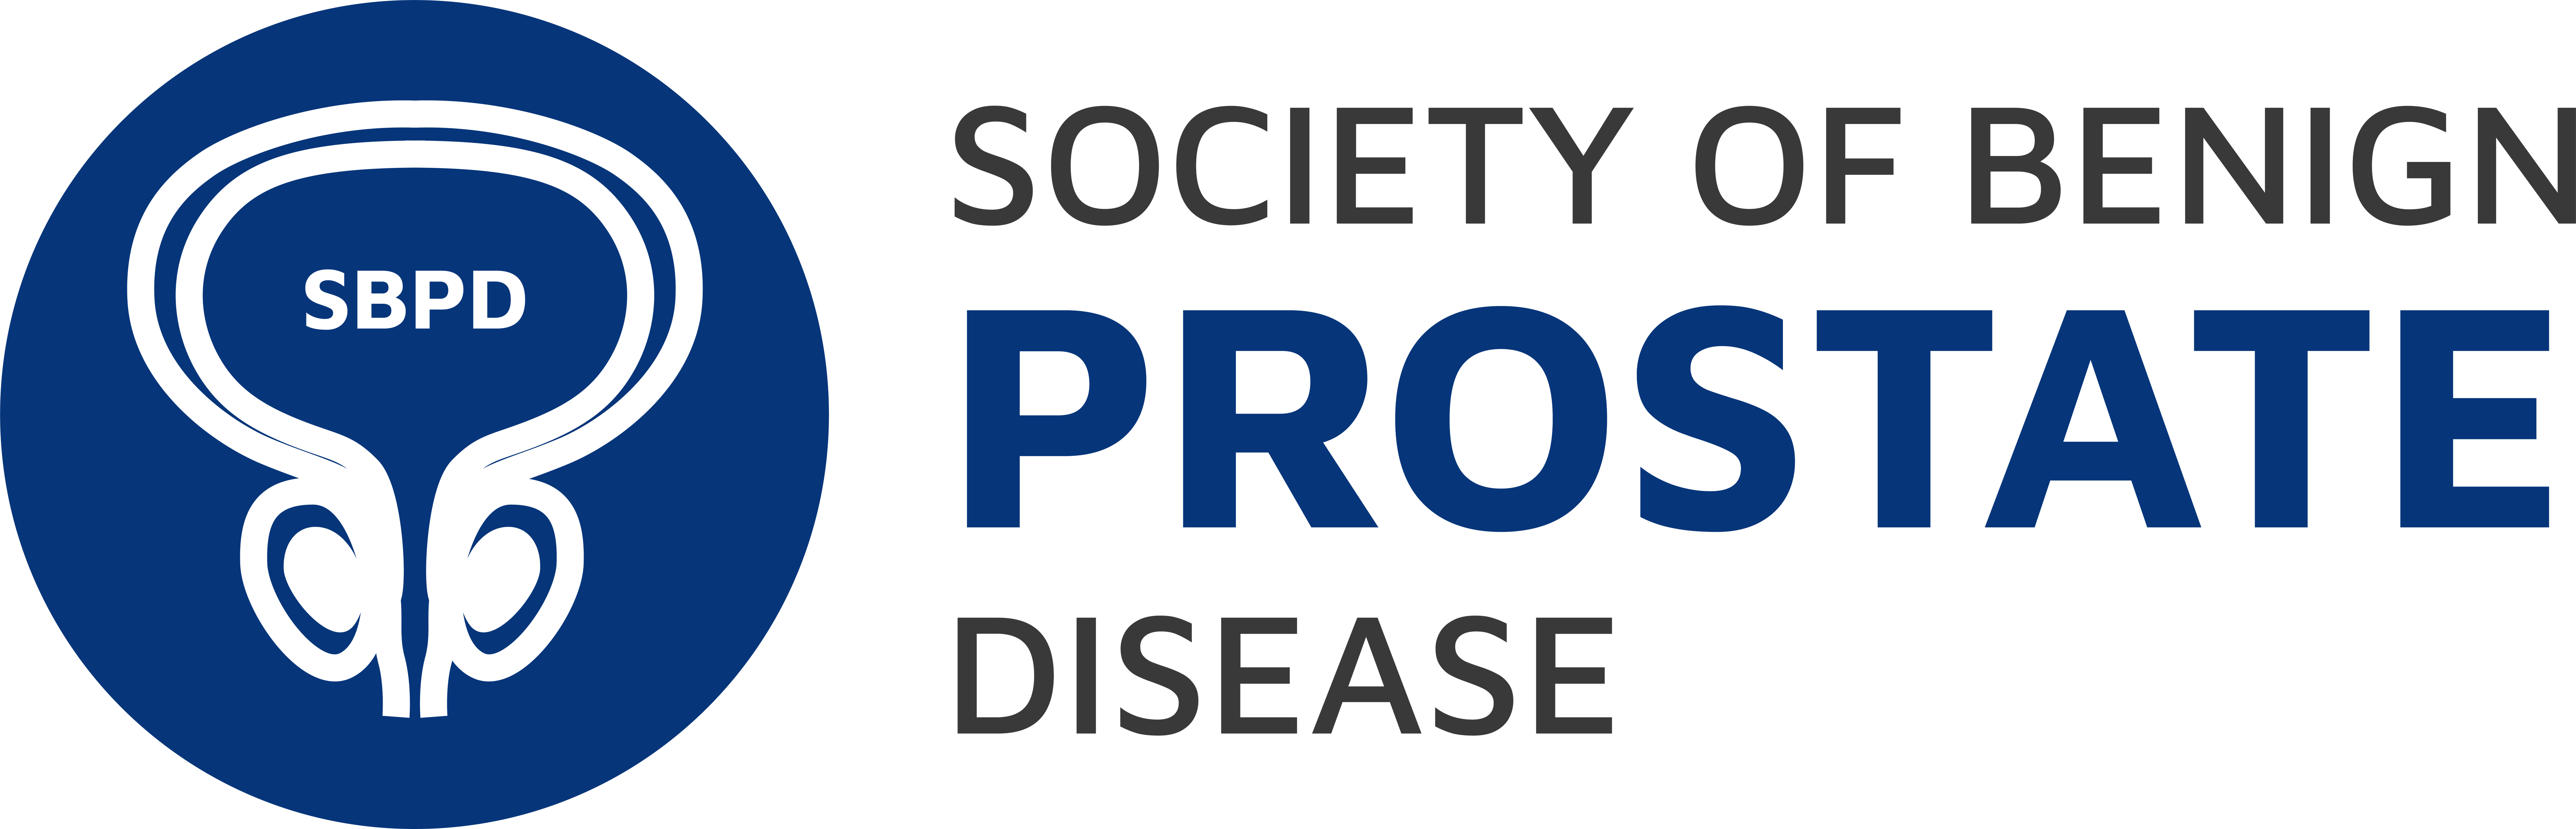 Society of Benign Prostate Disease logo